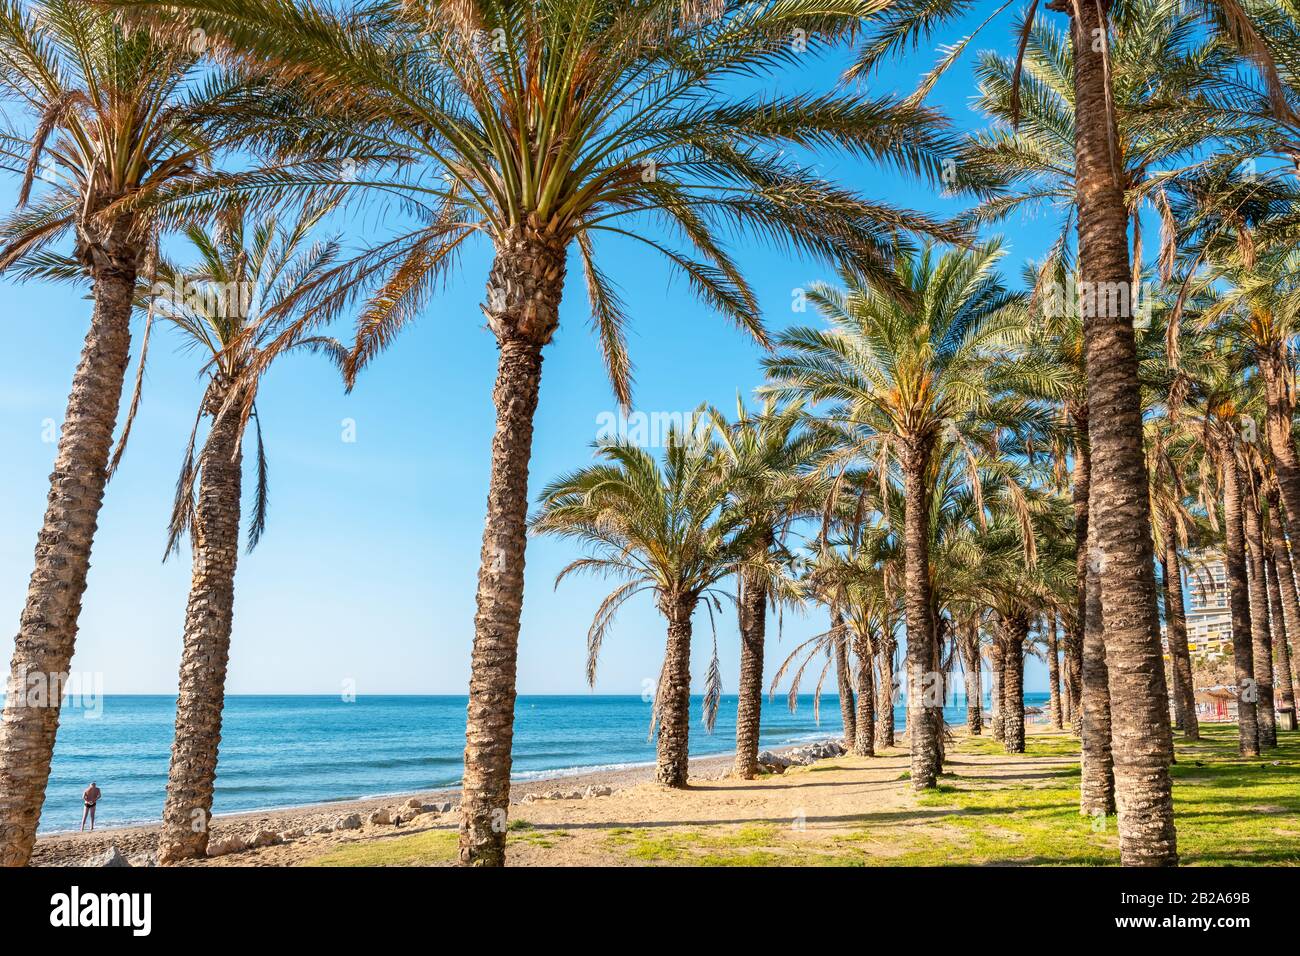 Palmeraie le long de la plage de Torremolinos. Costa del Sol, Andalousie, Espagne Banque D'Images